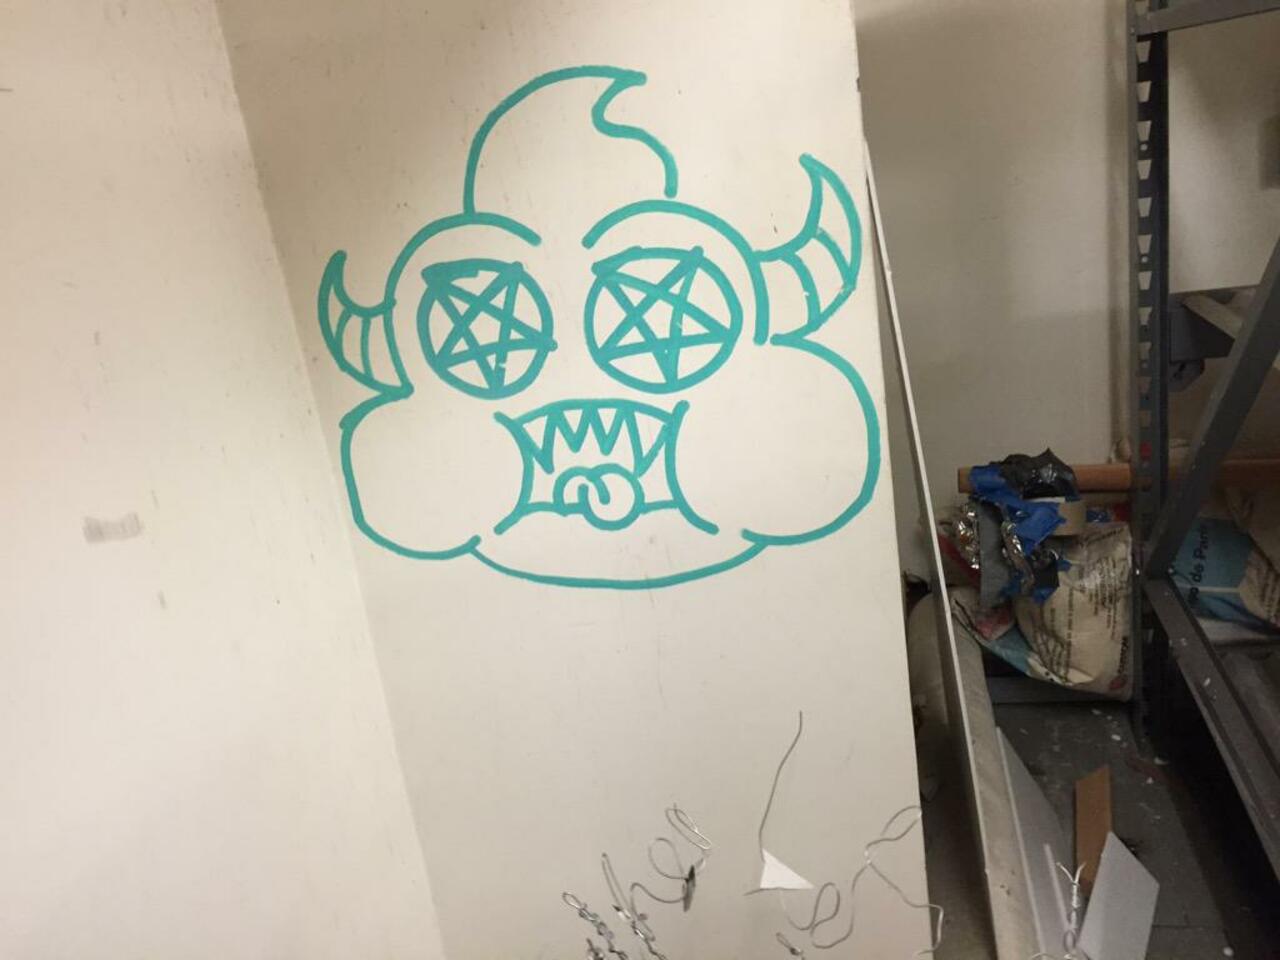 Found this in Hunter College inside the art room #graffiti #Nikon #art #streetart #huntercollege #nyc http://t.co/jbnWaMgEMg